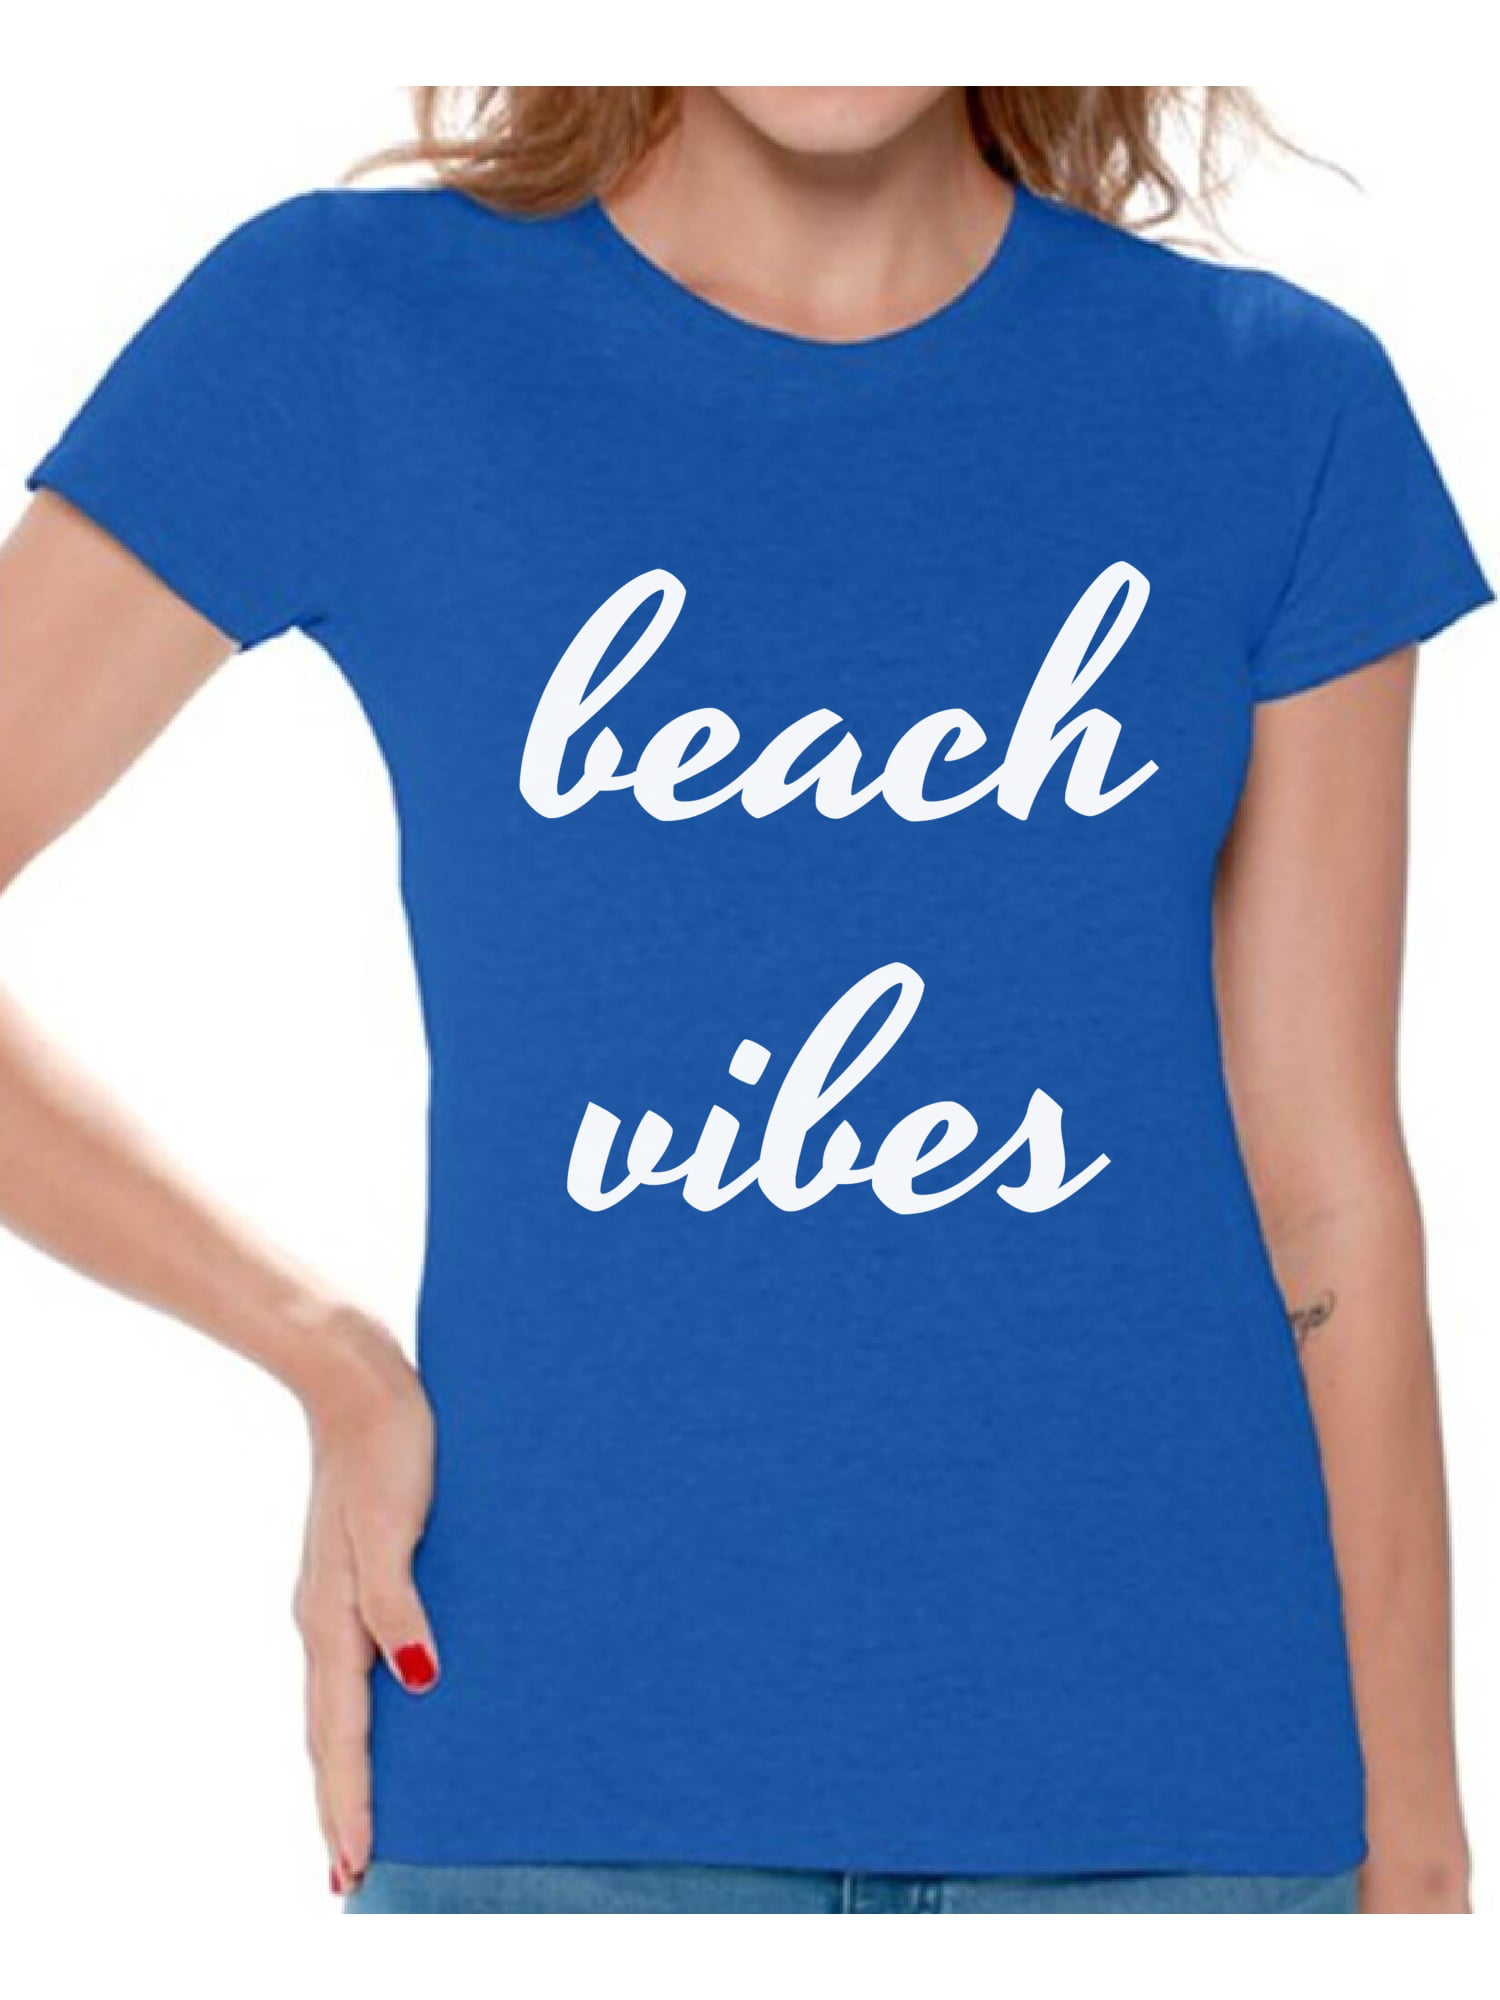 fun summer drinking shirt better person when i'm tan beach t-shirt womens tan t-shirt Funny Womens t shirt